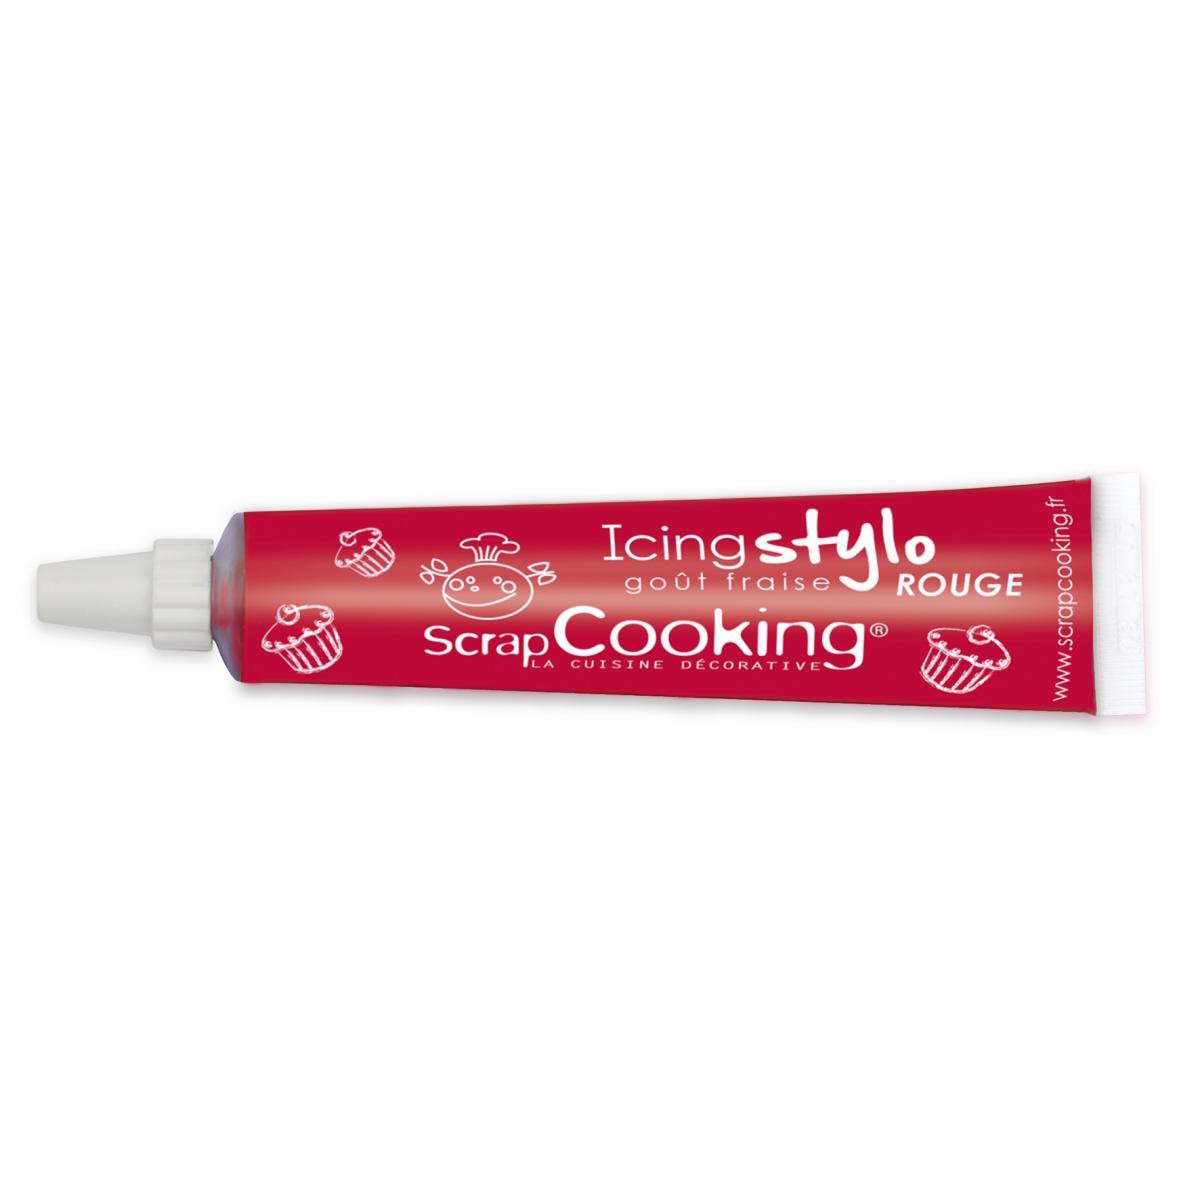 Scrapcooking - Icing stylo rouge Goût fraise - Scrapcooking - Kits créatifs